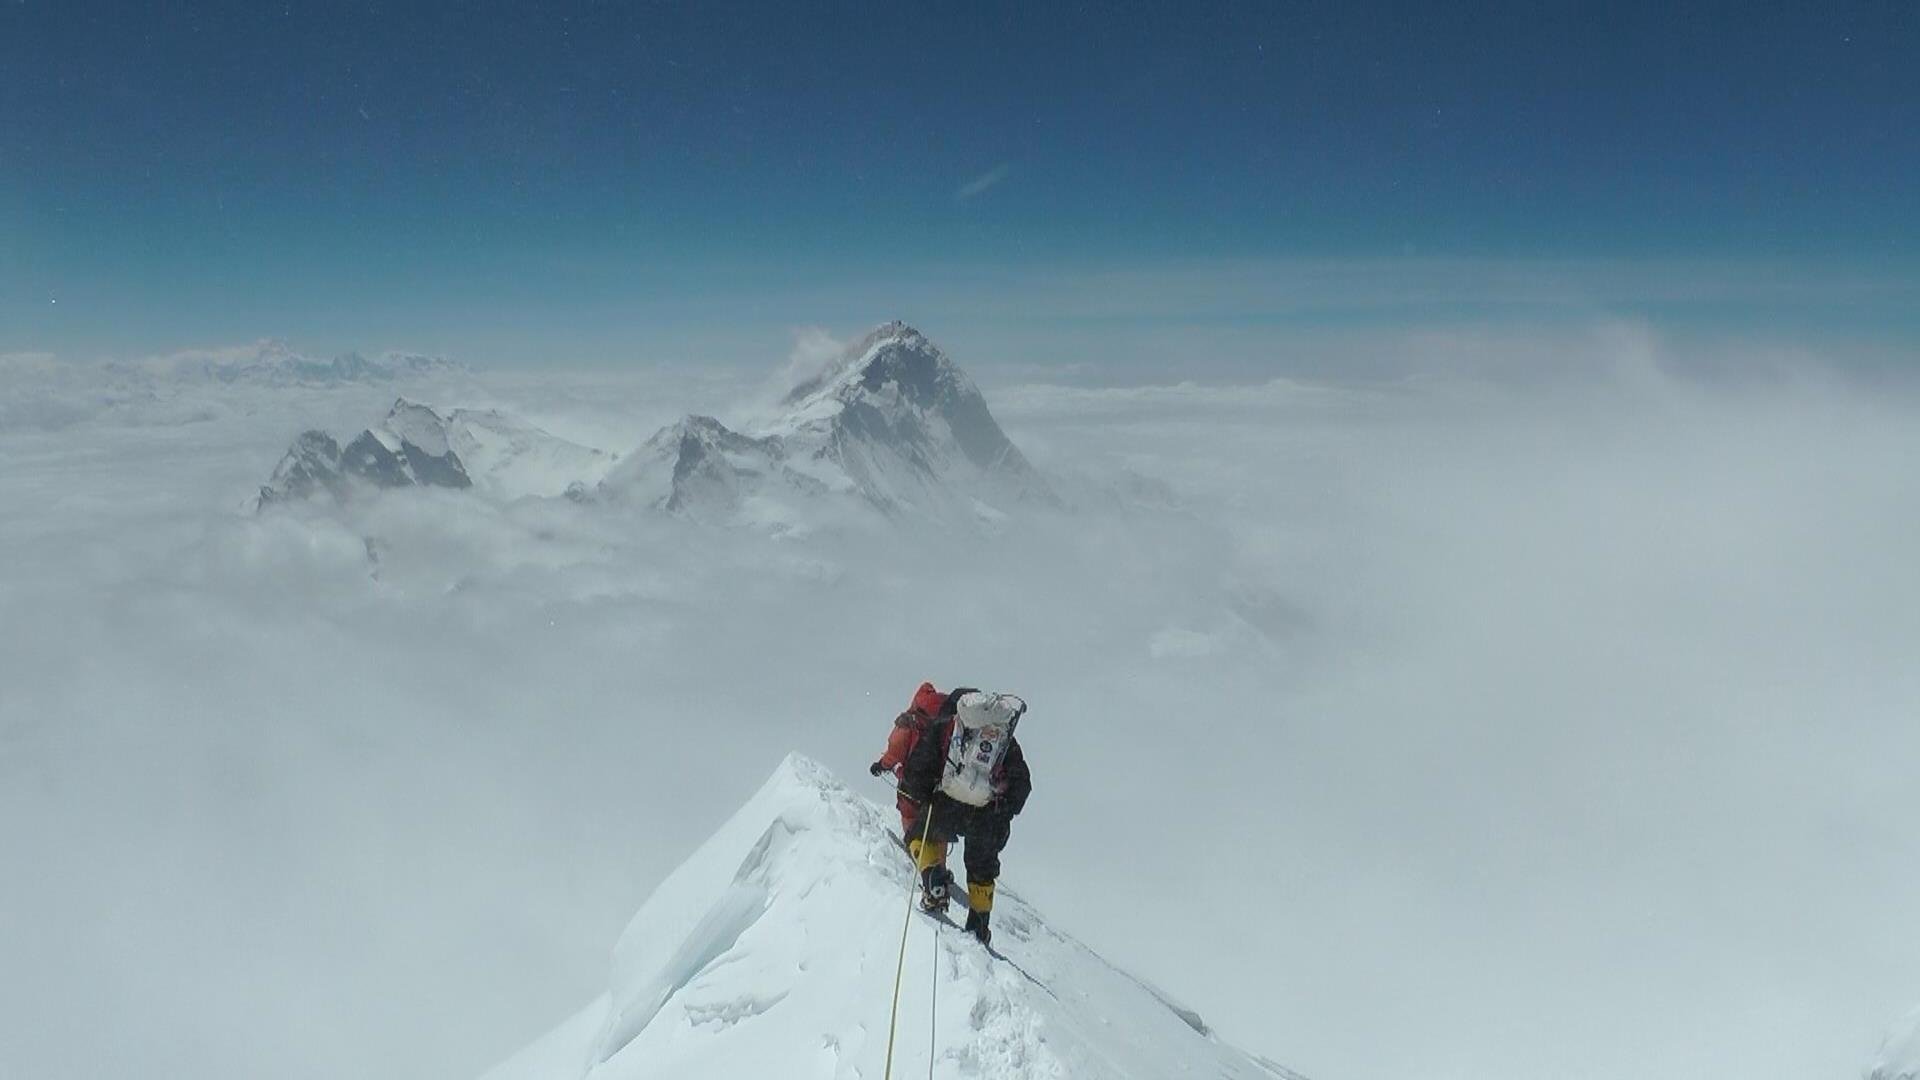 Вершина далекая кажется близкою. Вершина Джомолунгма Эверест. Тигр снегов Тенцинг Норгей. Эльбрус Эверест Джомолунгма. Гора Эльбрус альпинисты.